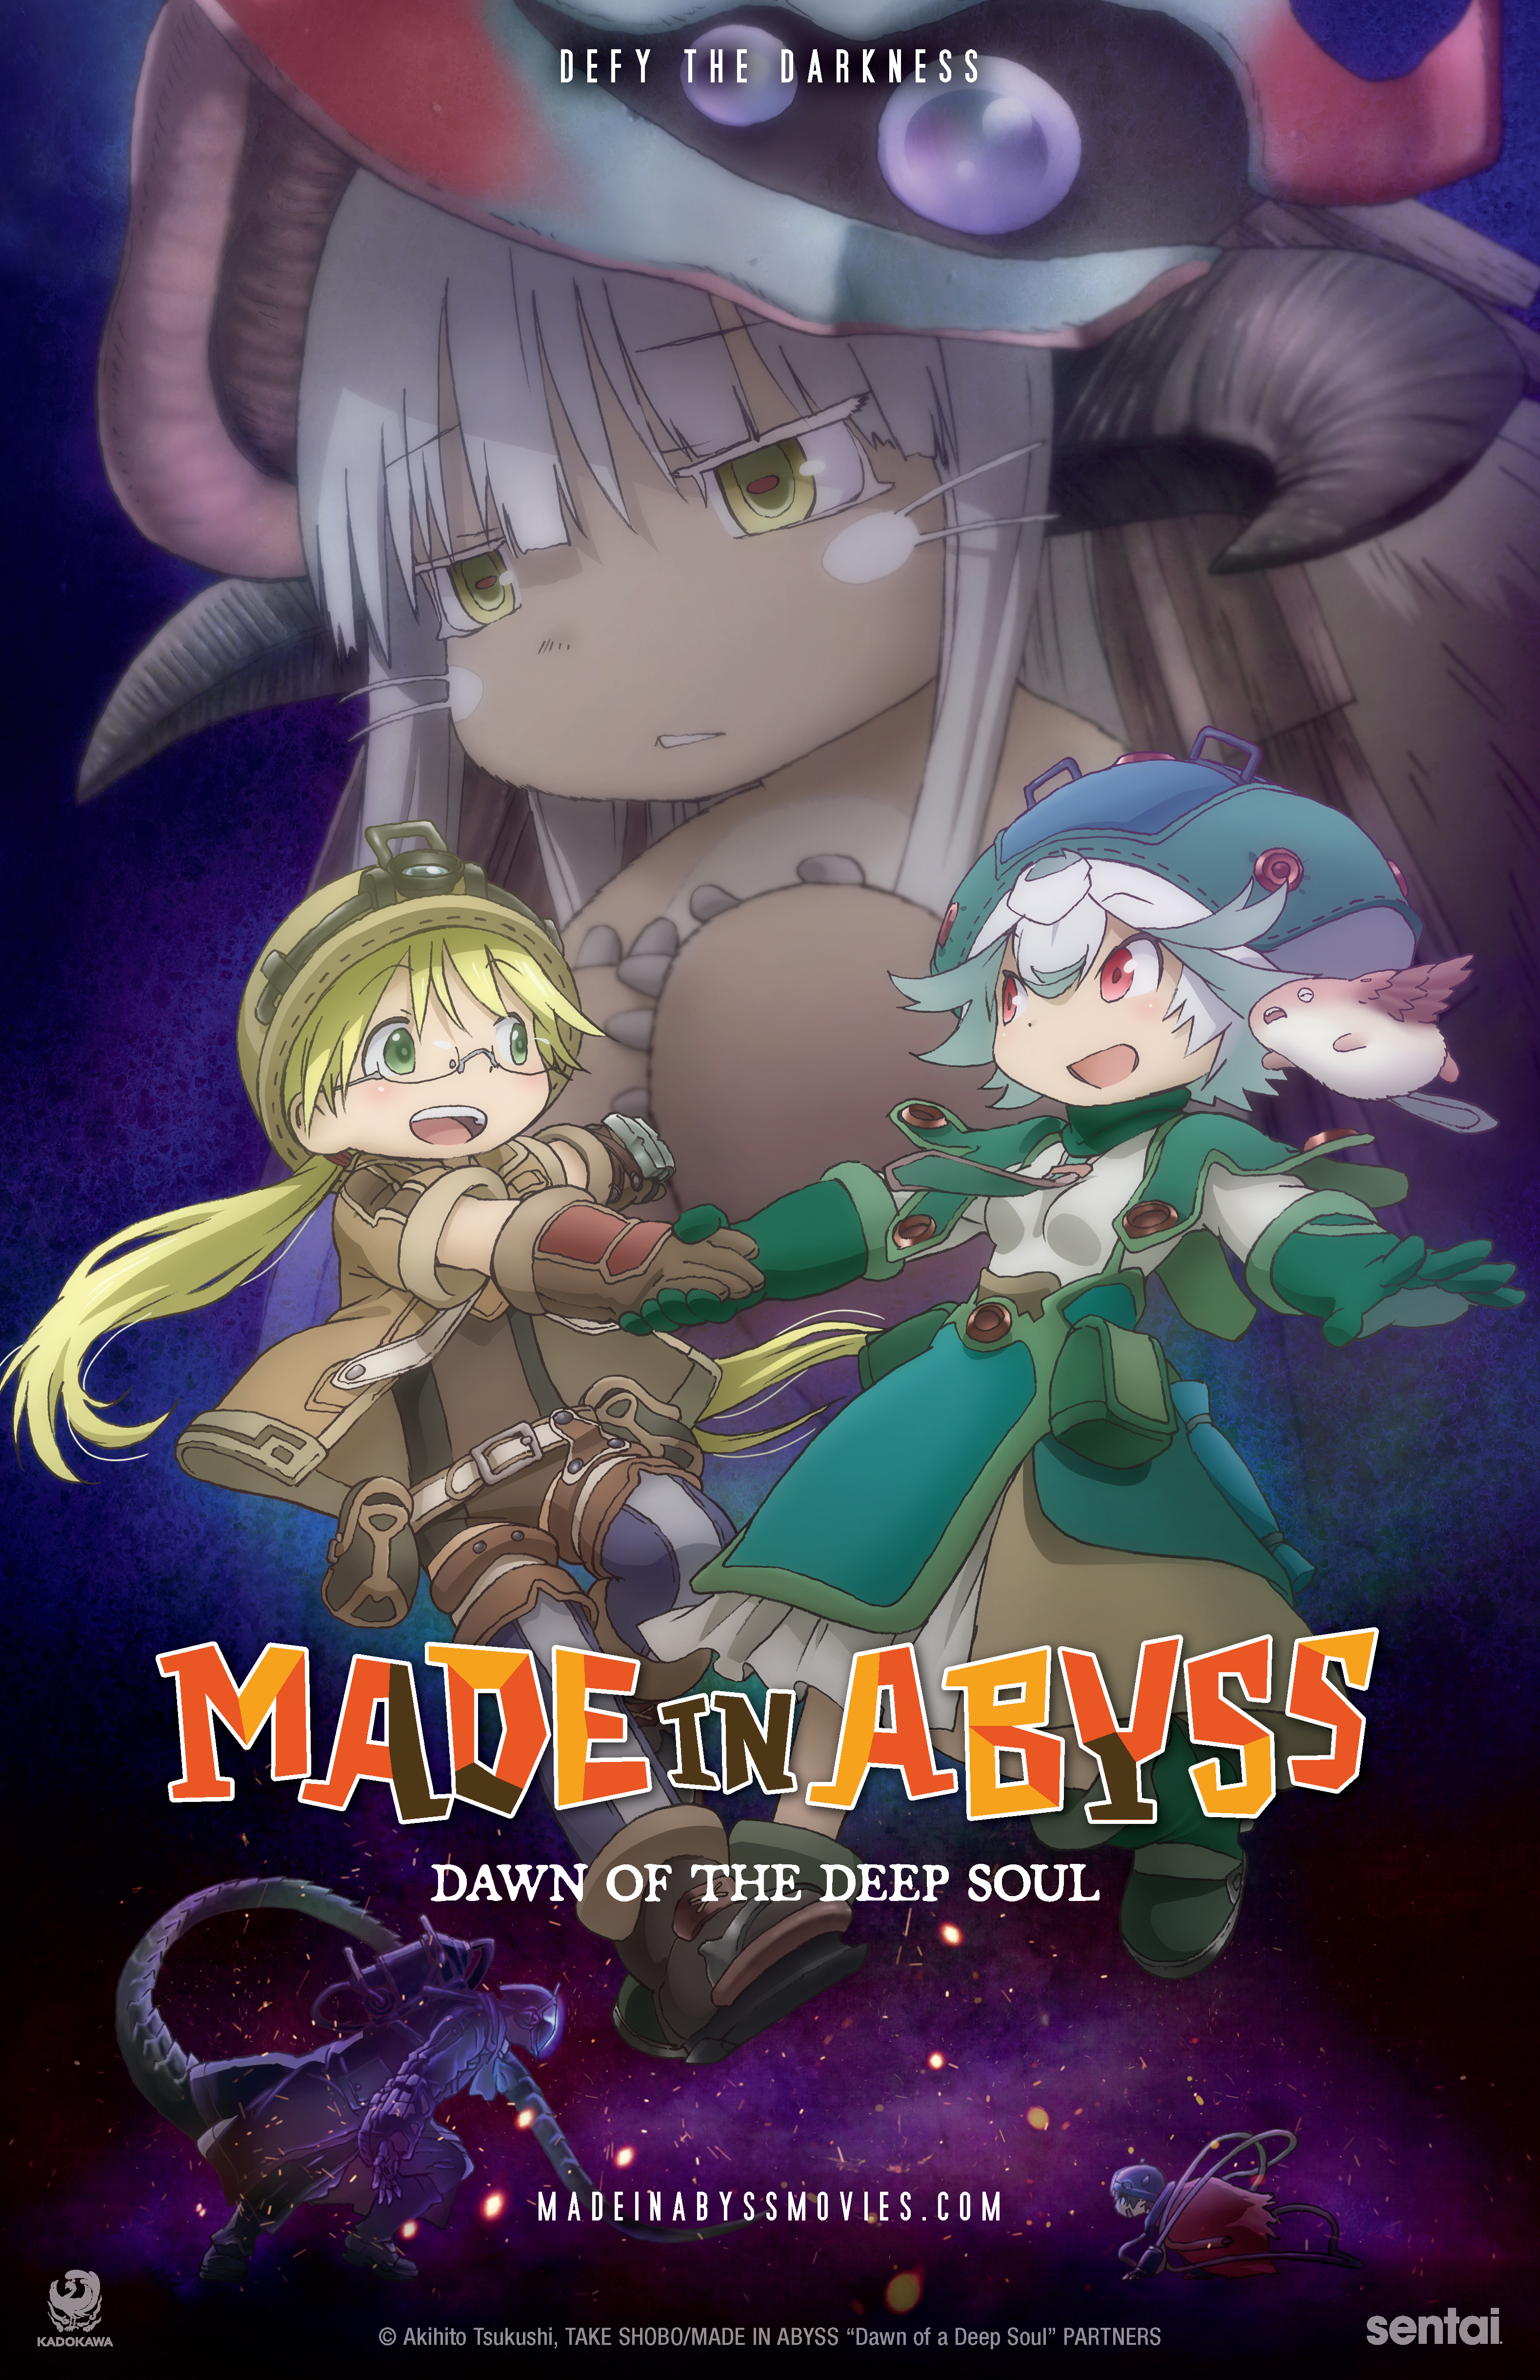 O anime Made in Abyss (Meido in Abisu) teve sua segunda temporada